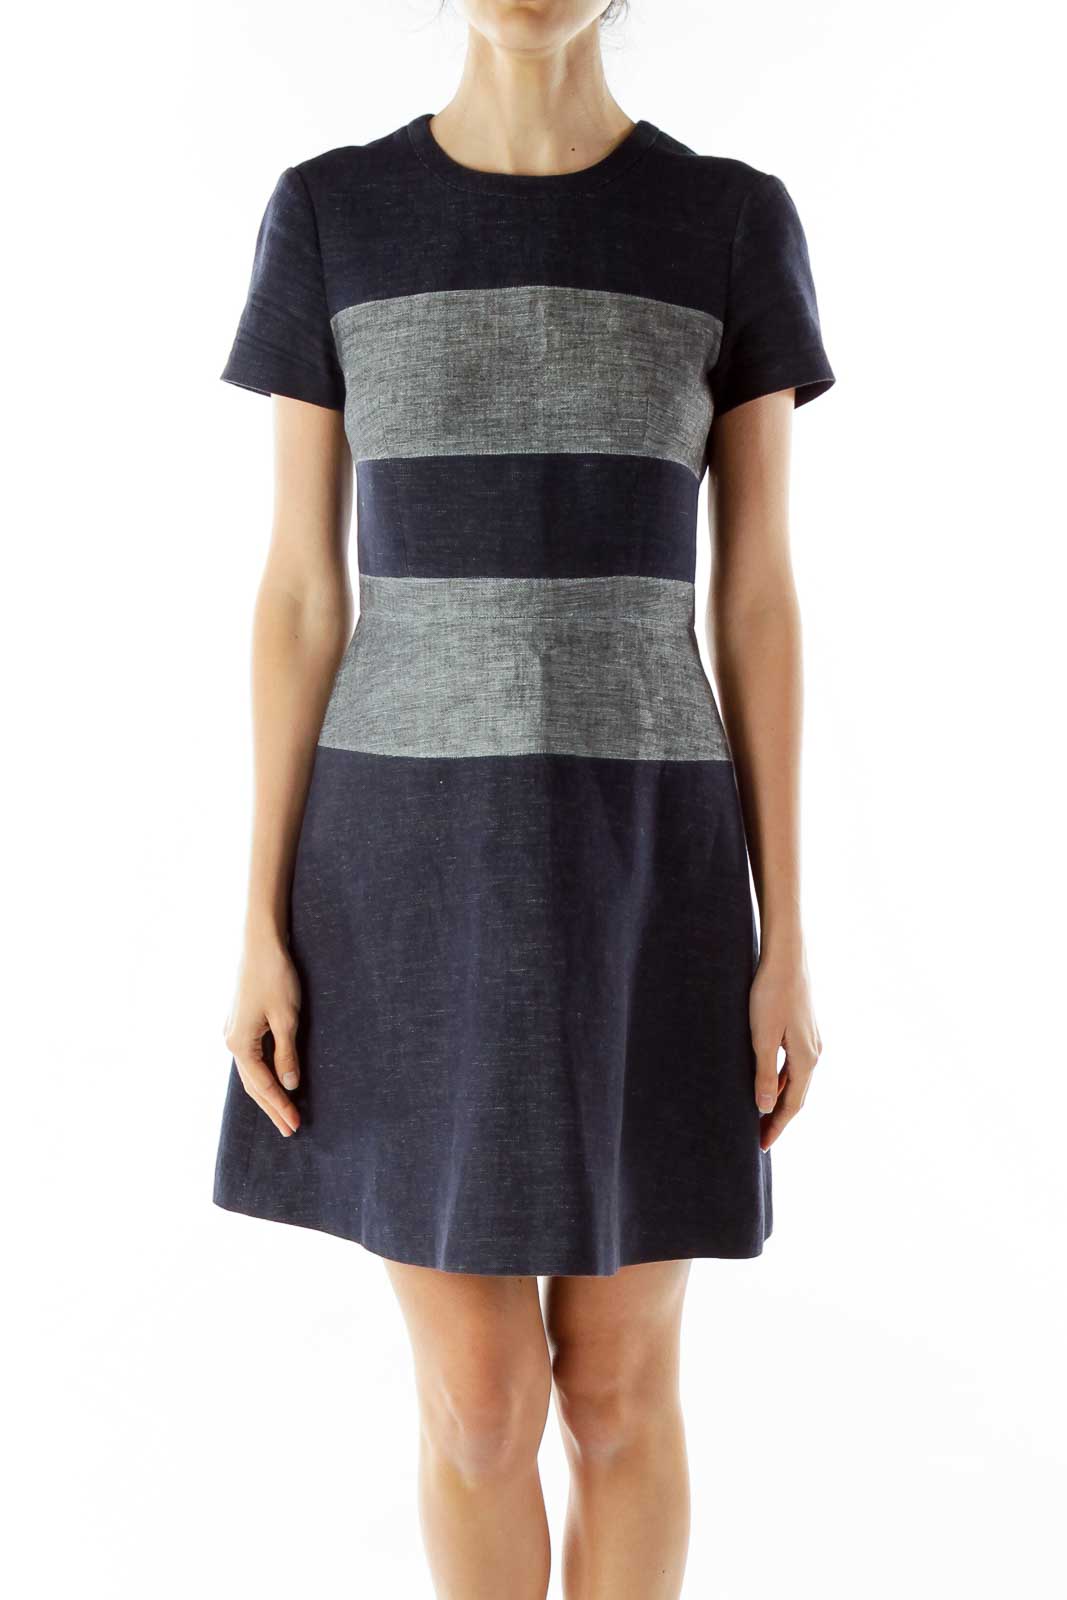 Blue Gray Striped Denim Dress Front